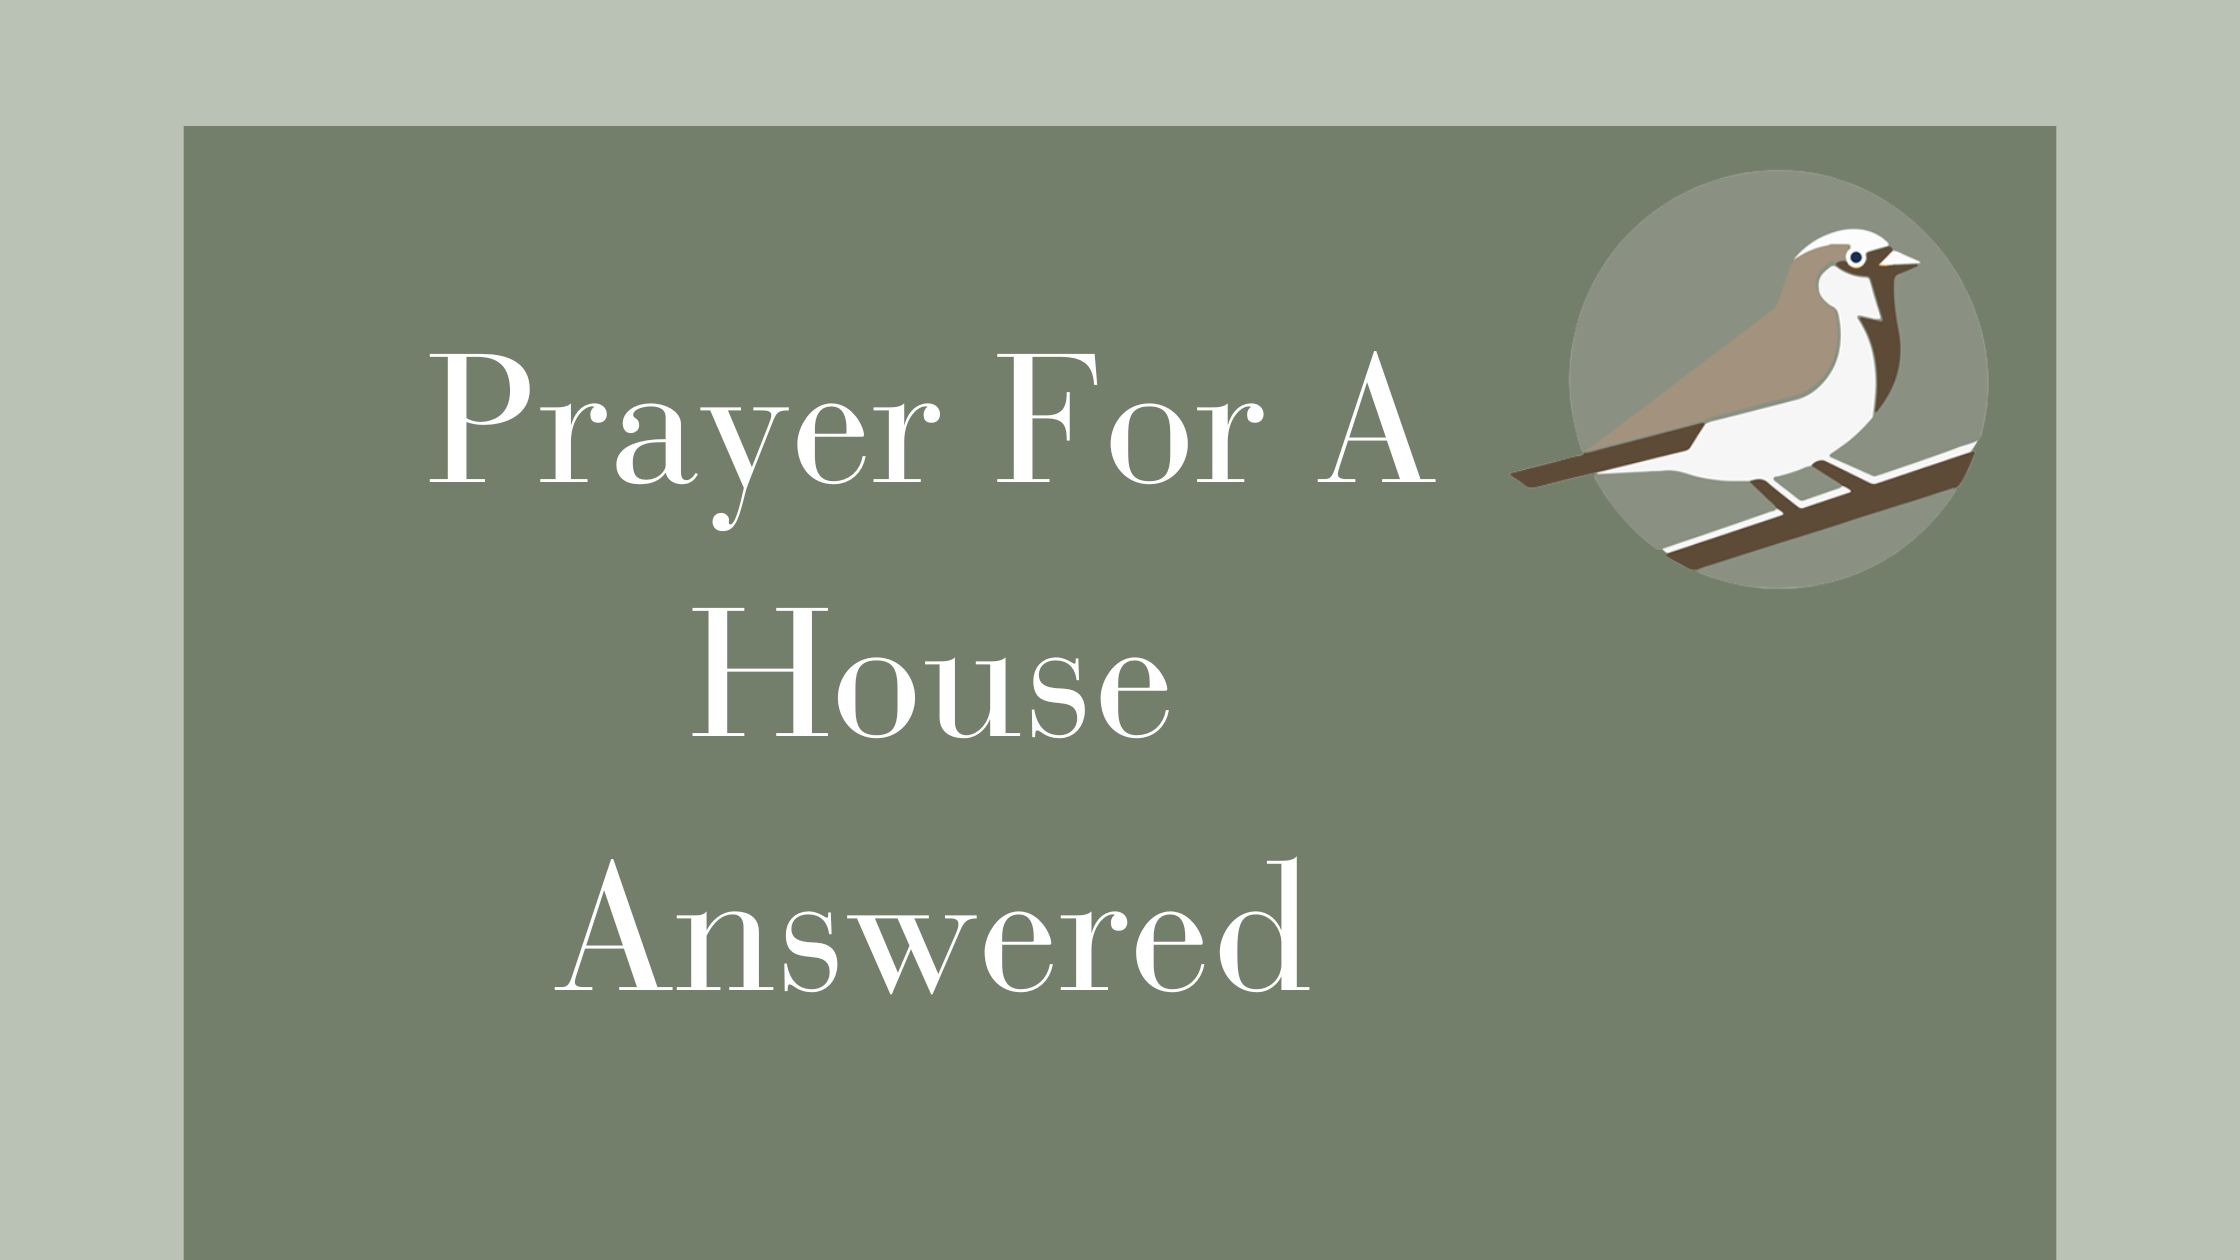 Prayer for a house